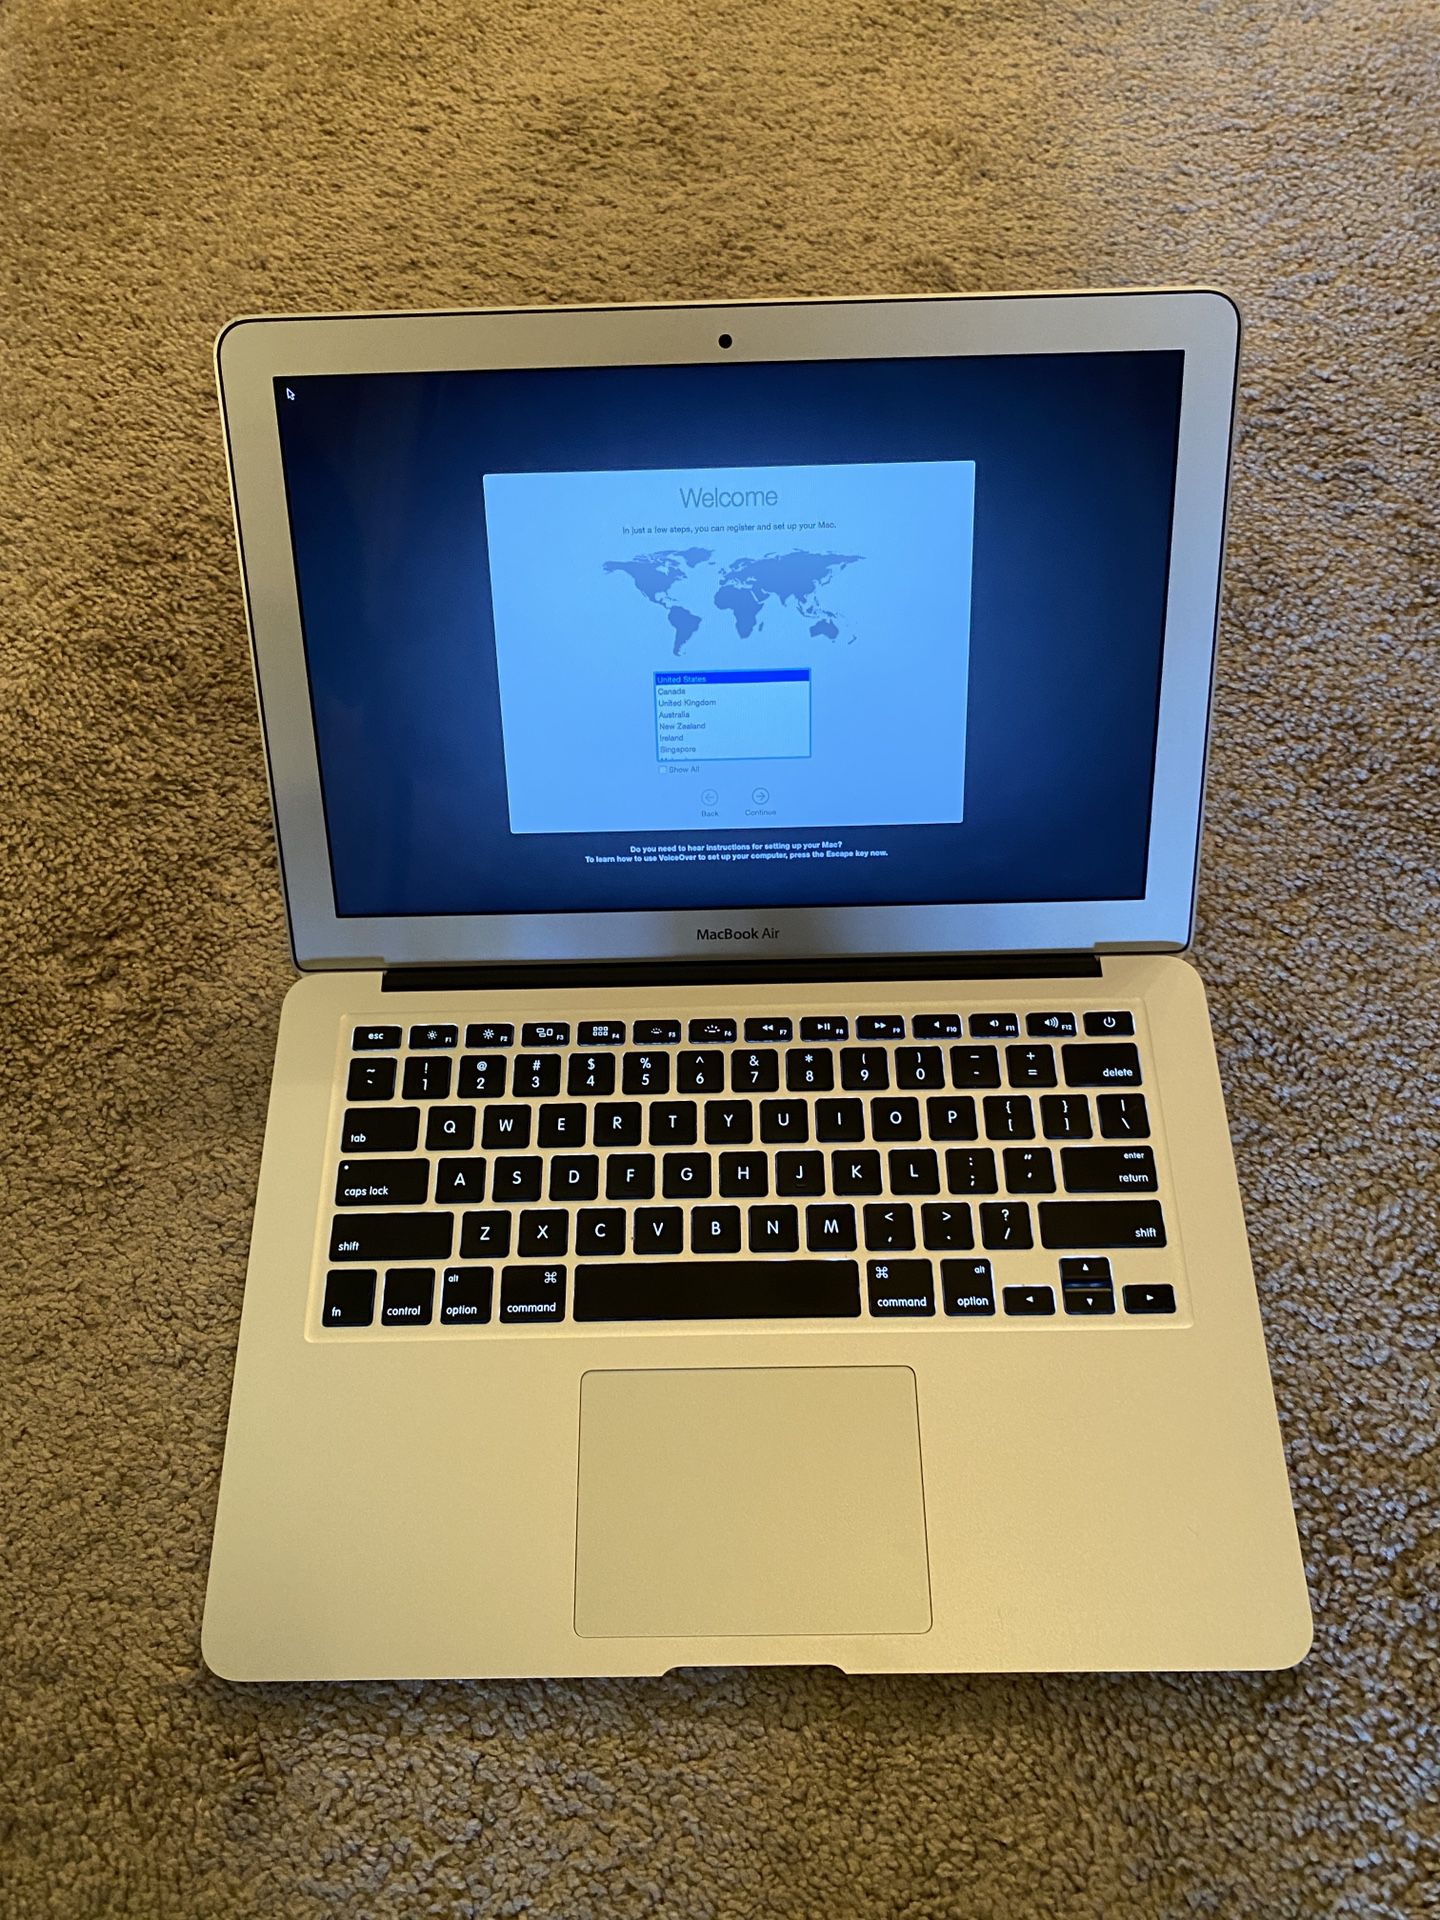 Apple Macbook Air 13” 2015 Model 1.6ghz / 128 GB / 4GB Memory